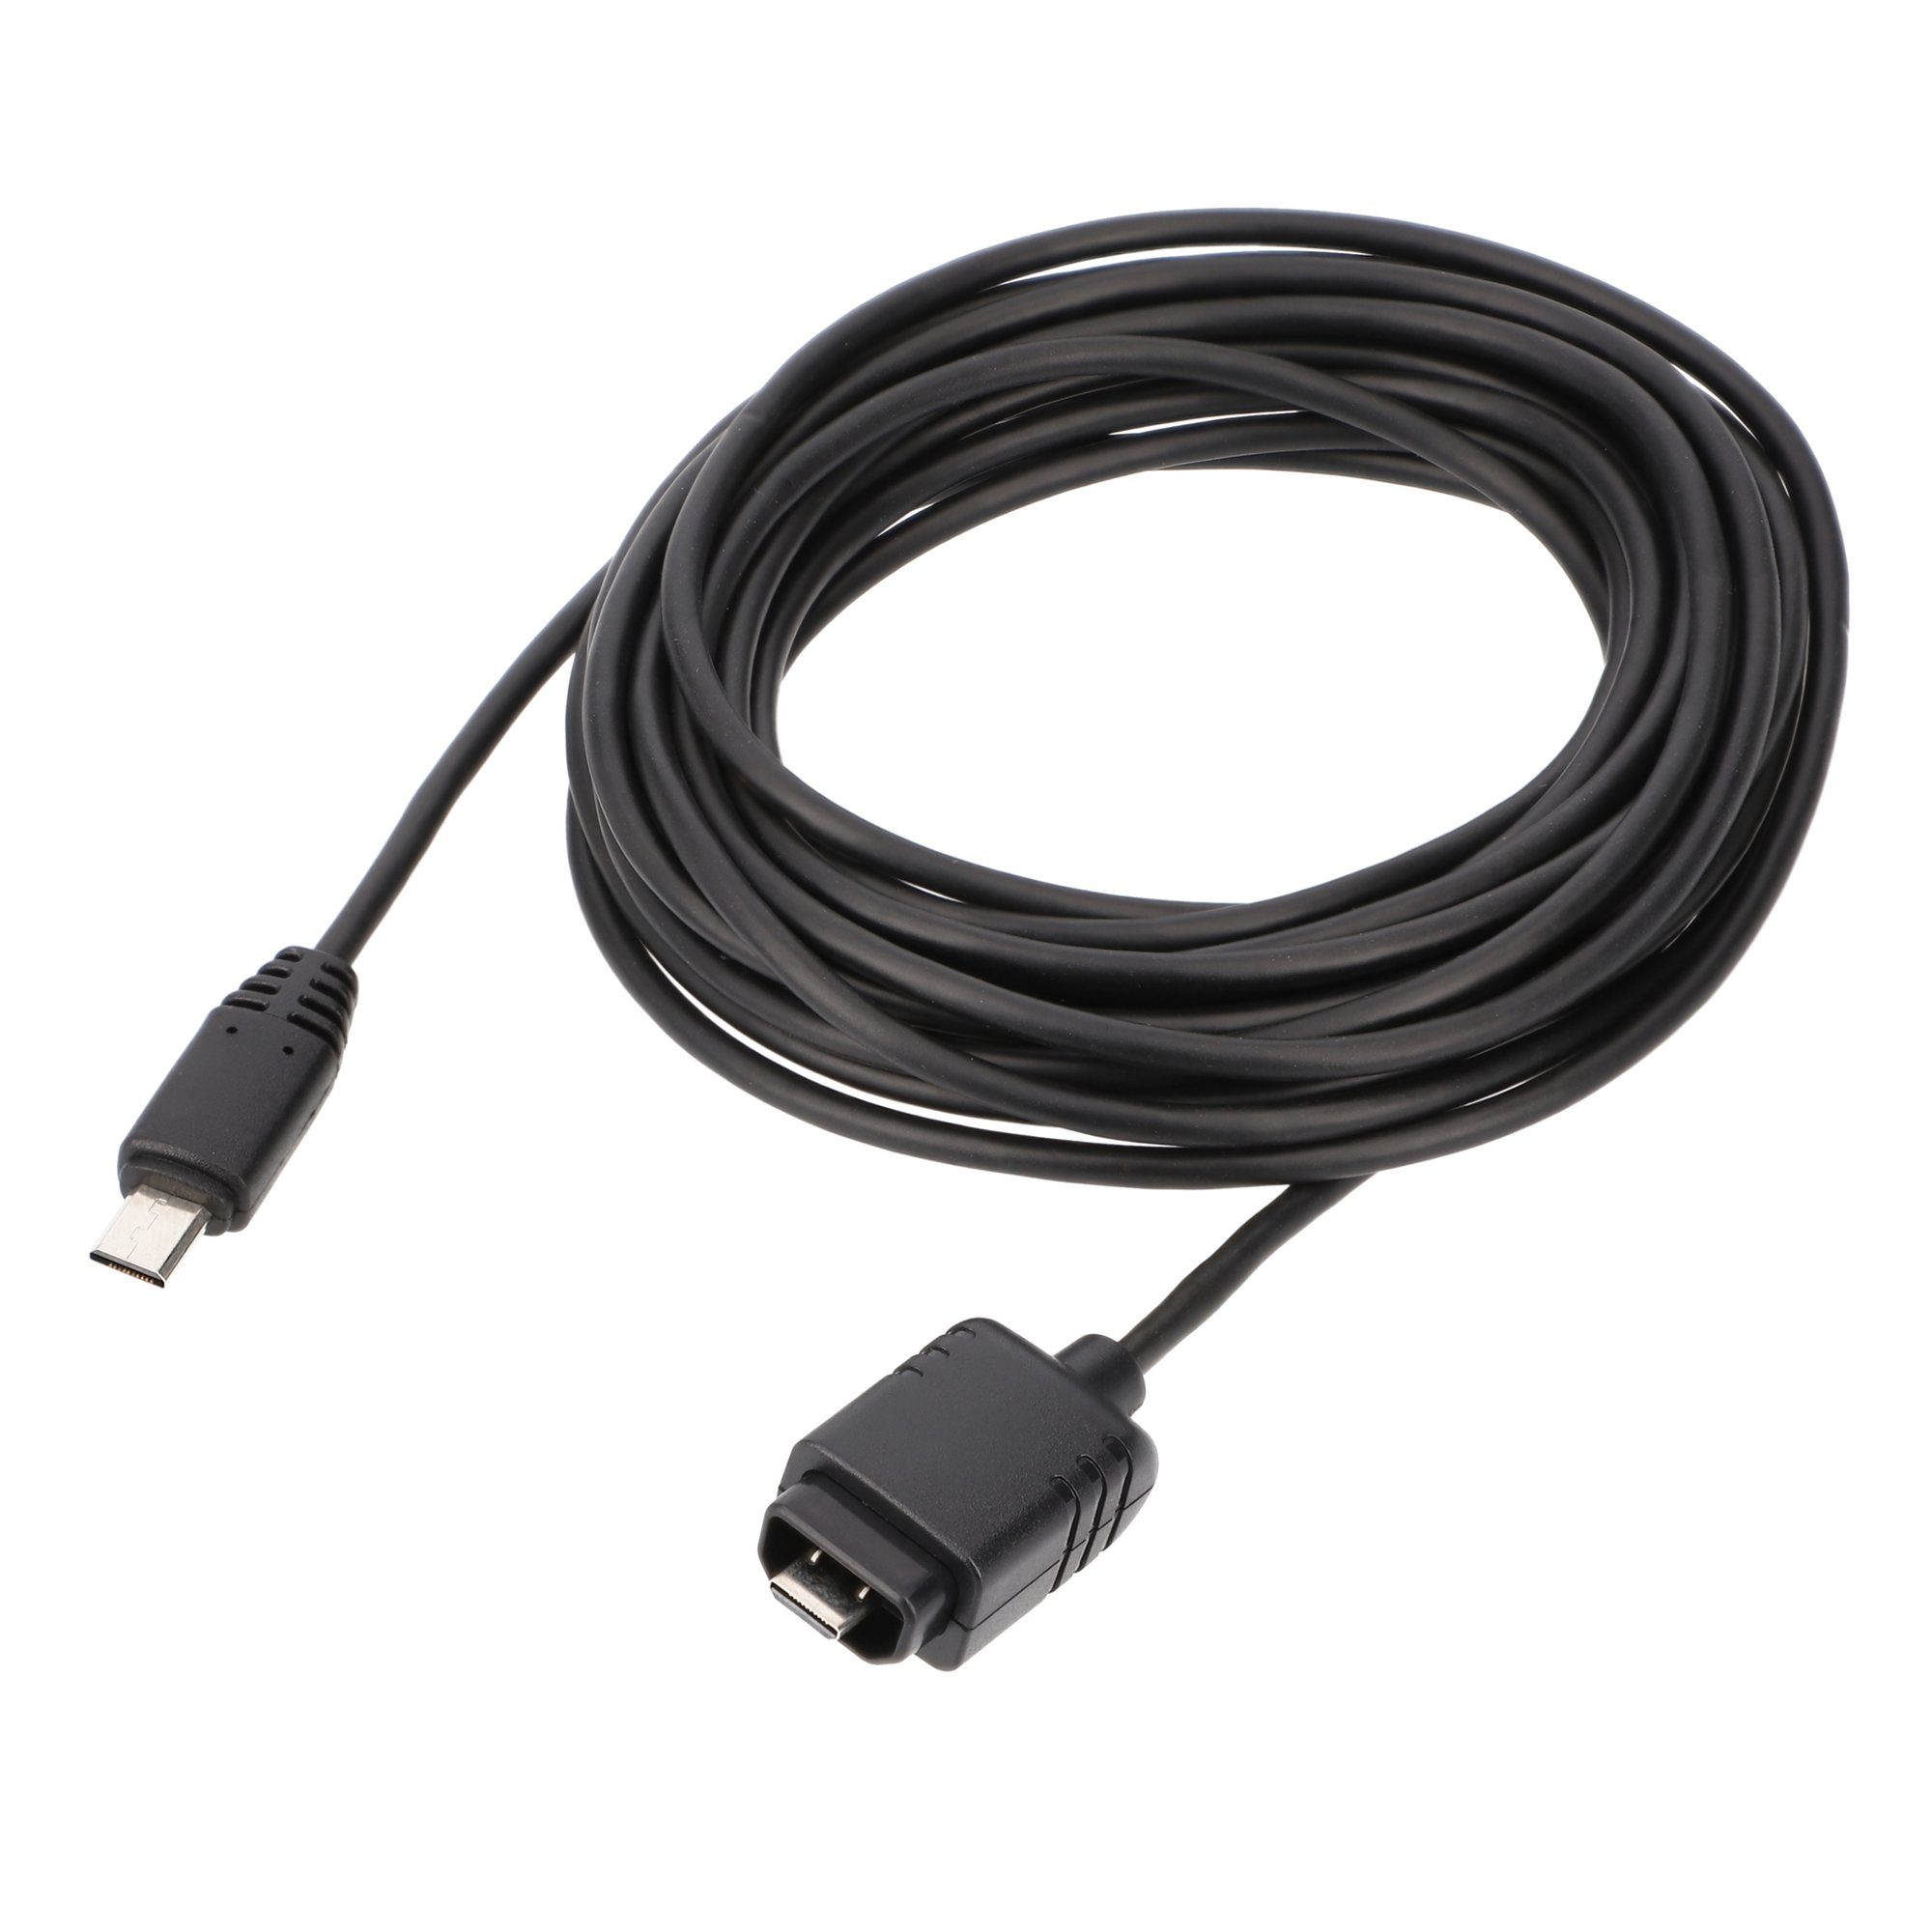 VMC-MM1 5 Sony Kabel ayex Kabel-Fernauslöser Multi Meter Kameras USB Terminal Connecting